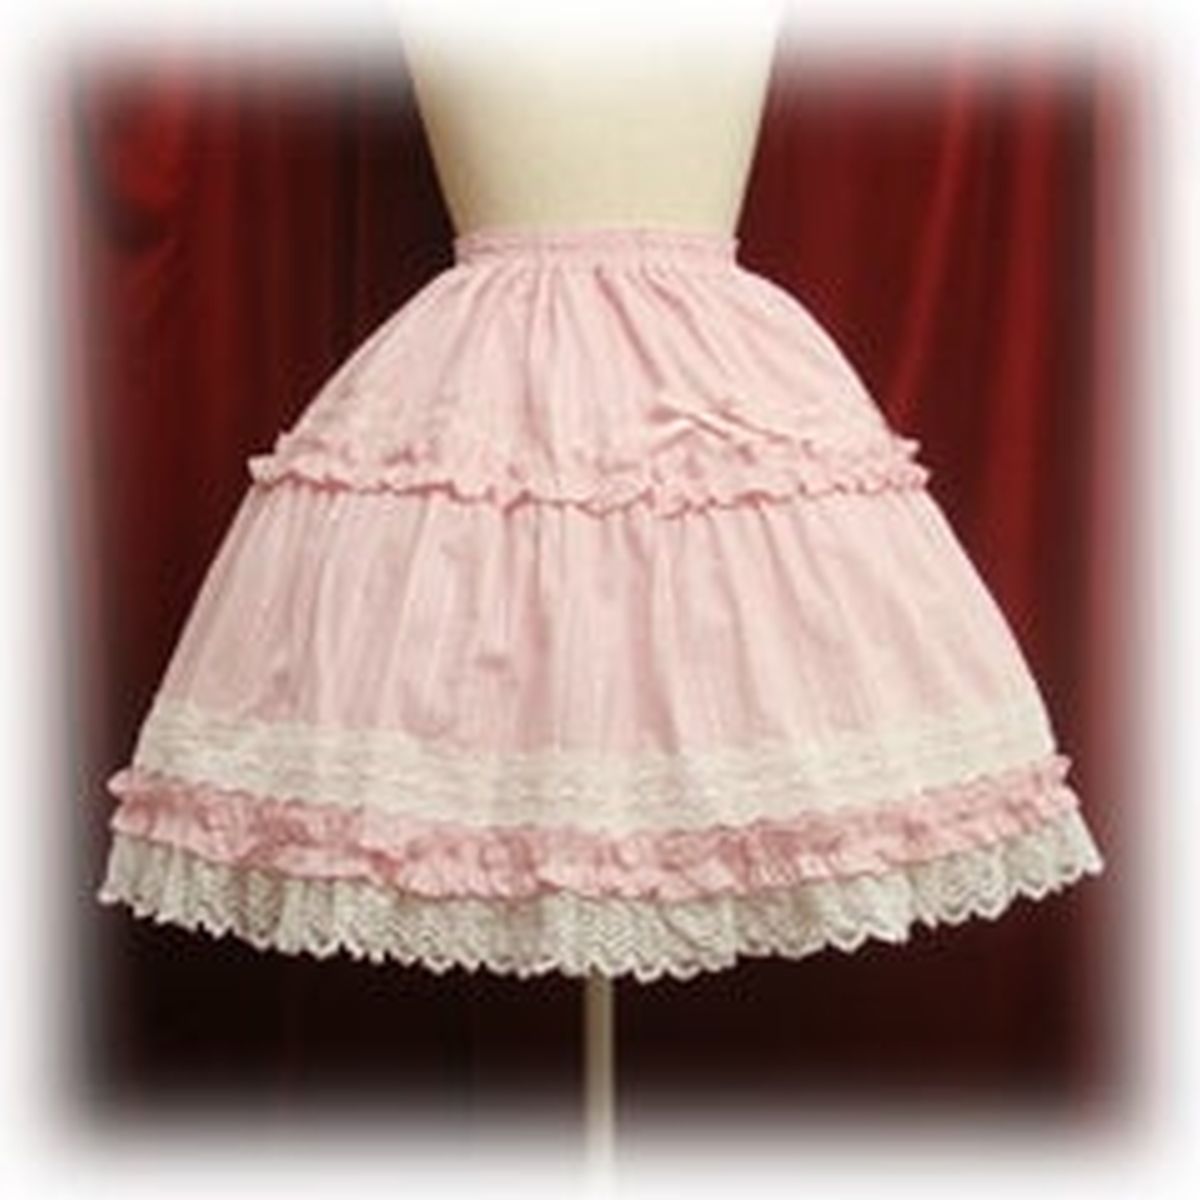 metamorphose bustle skirt with petticoat - pink - 2007